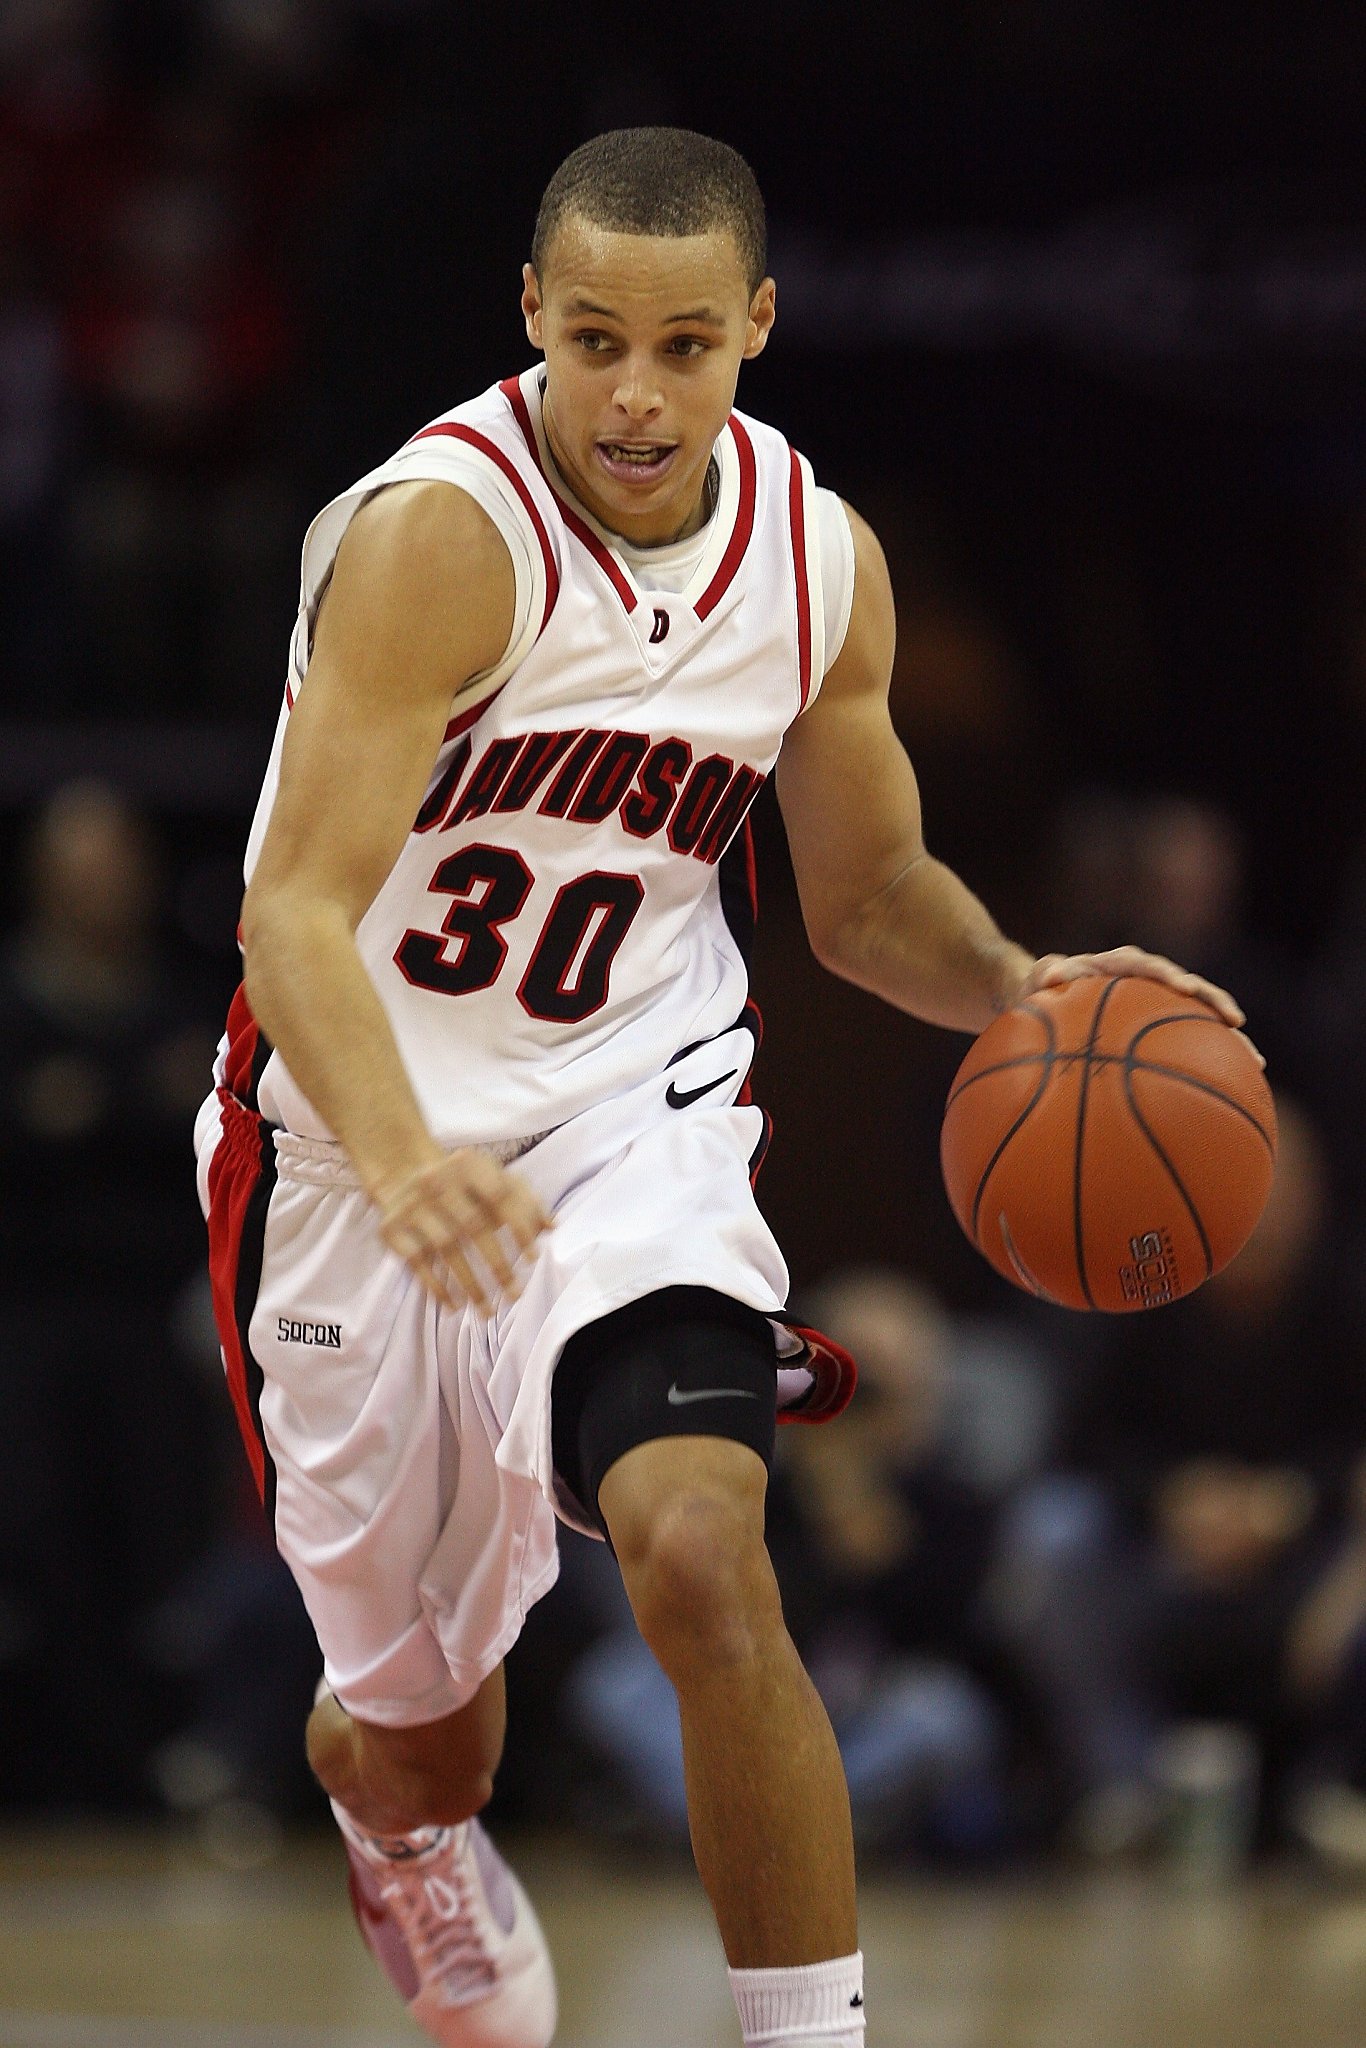 Stephen Curry Davidson Wildcats College Basketball Jersey – Best